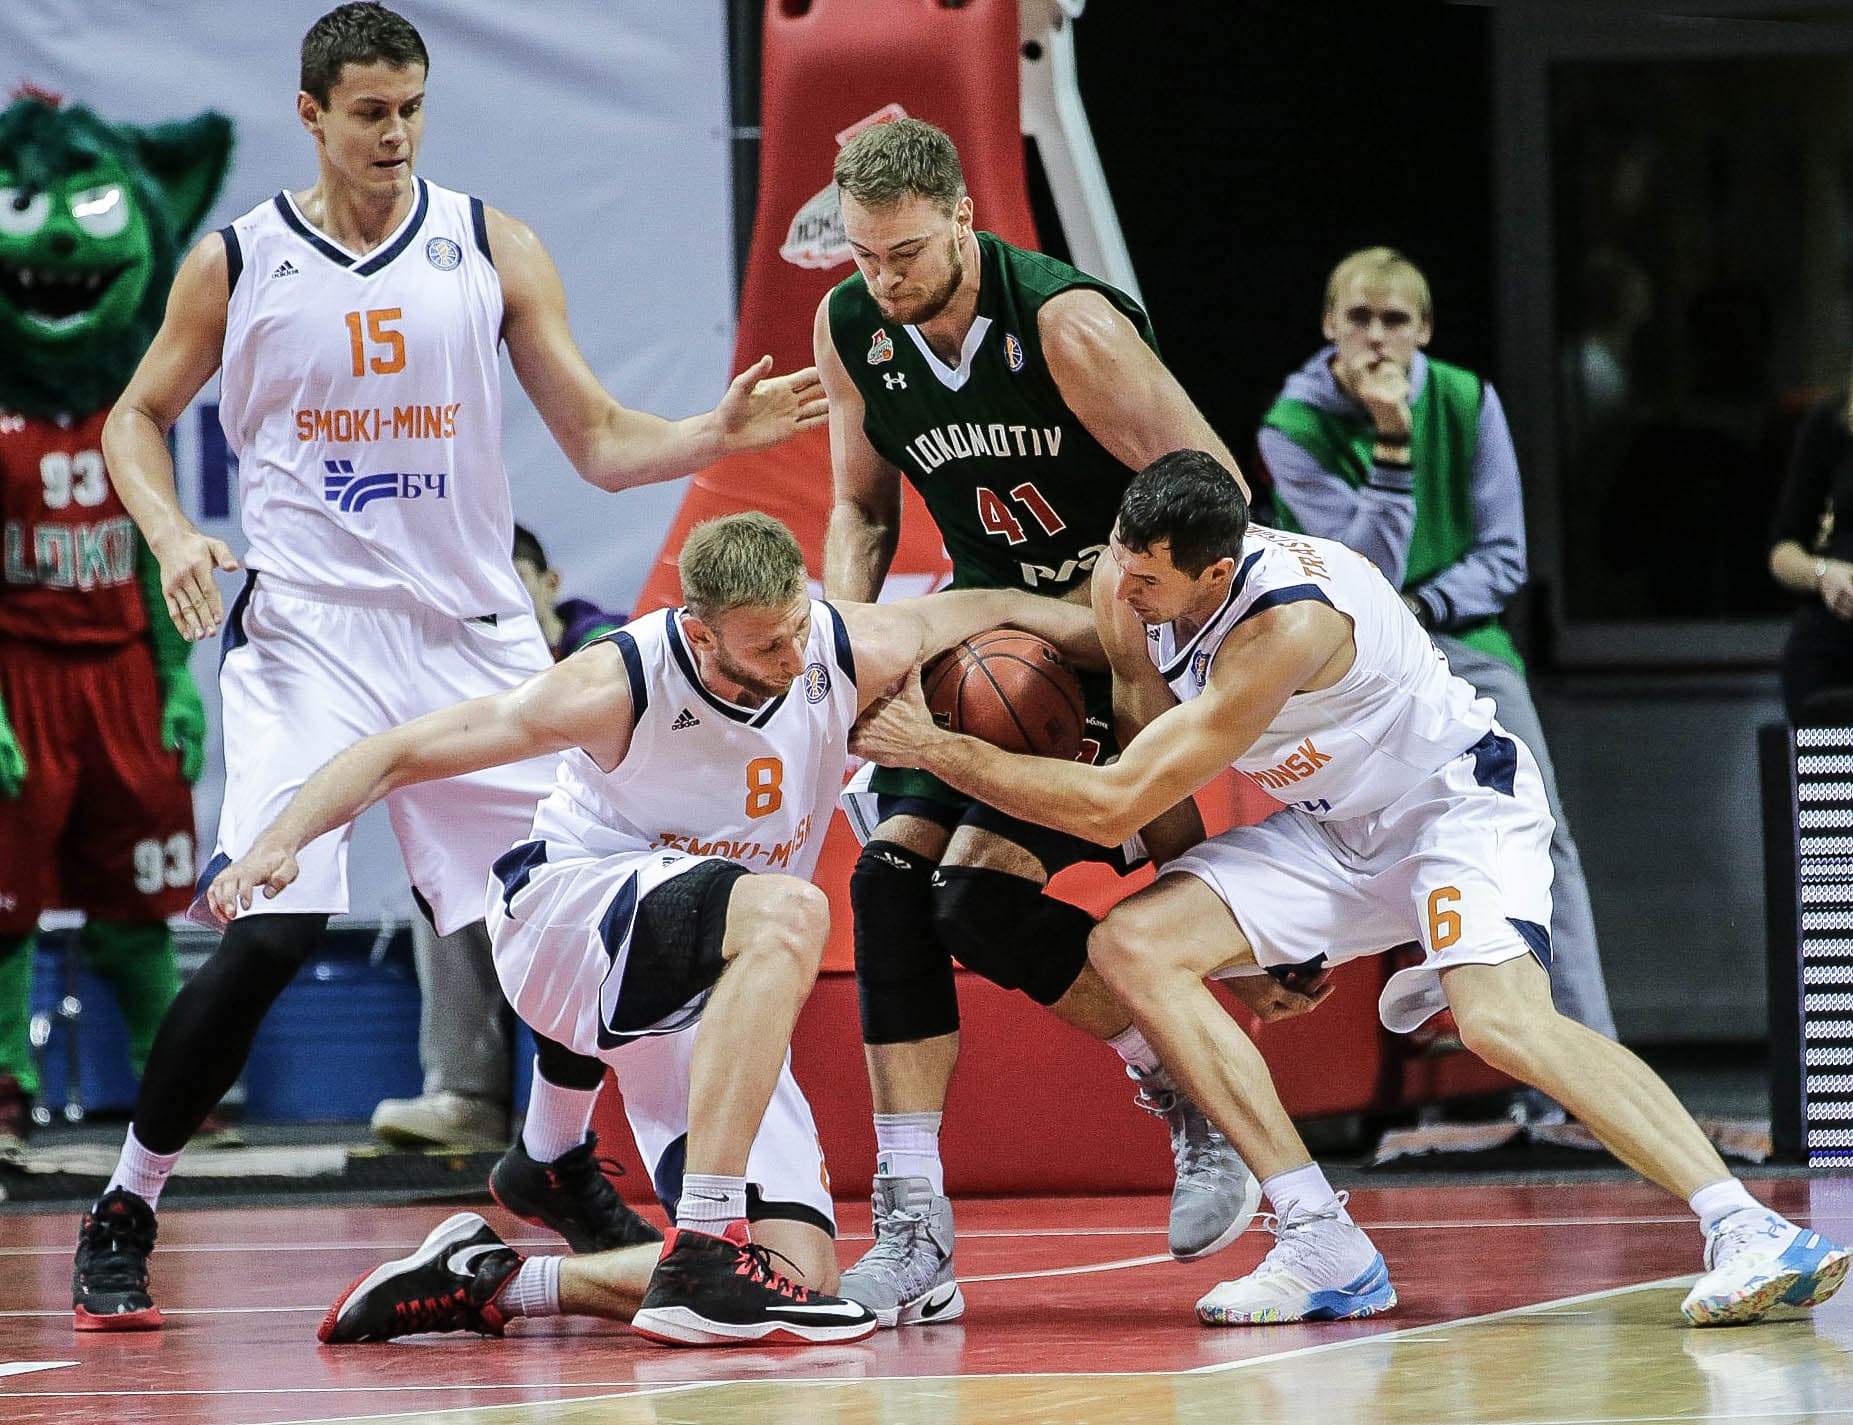 Loko Stifles Minsk At The Basket Hall